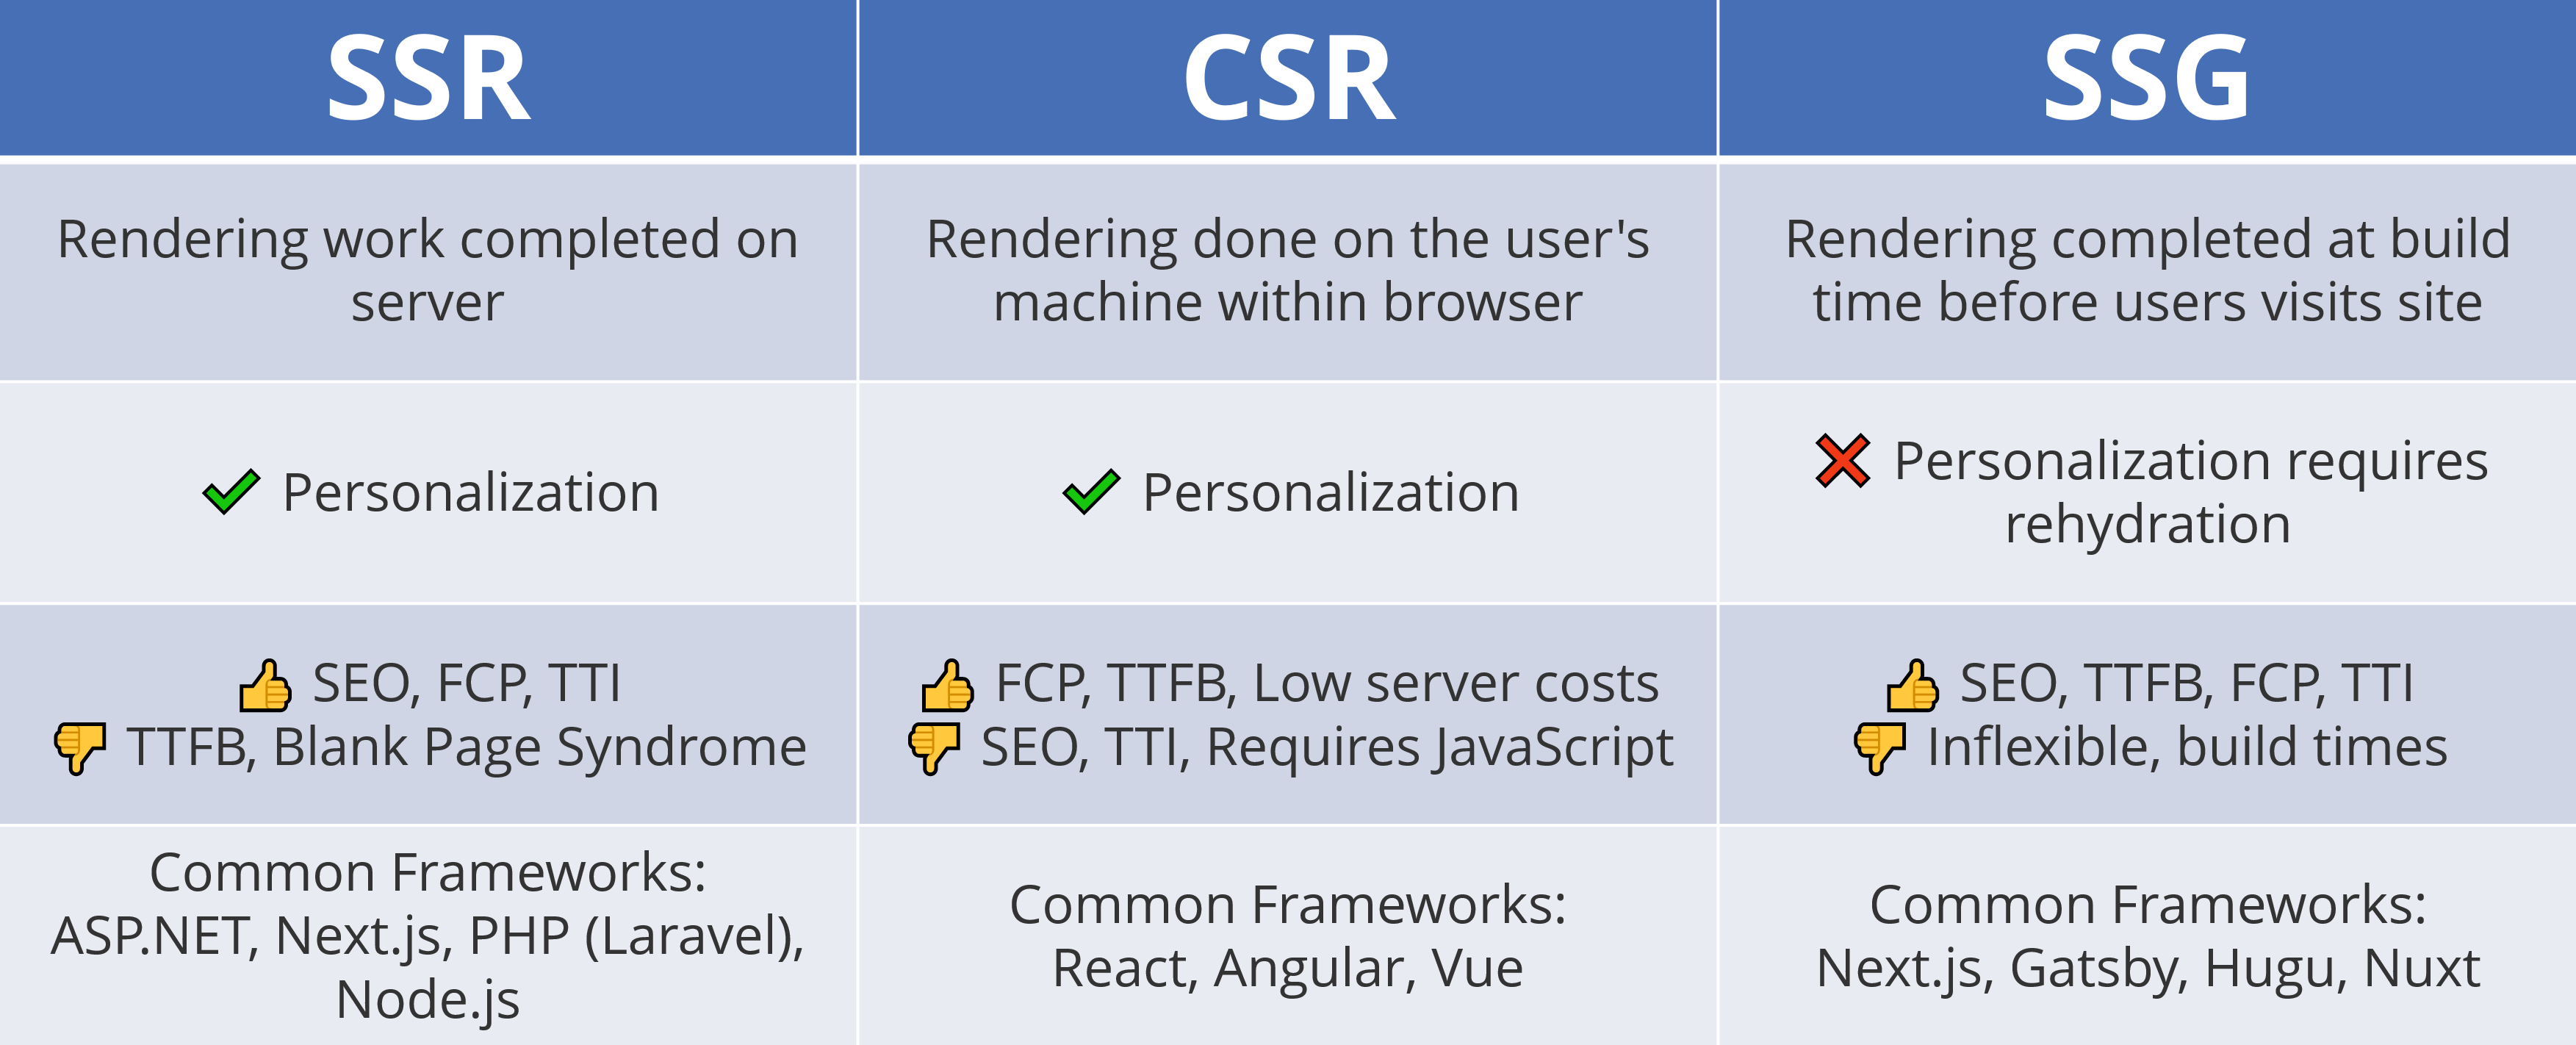 Overview of SSR vs. CSR vs. SSG